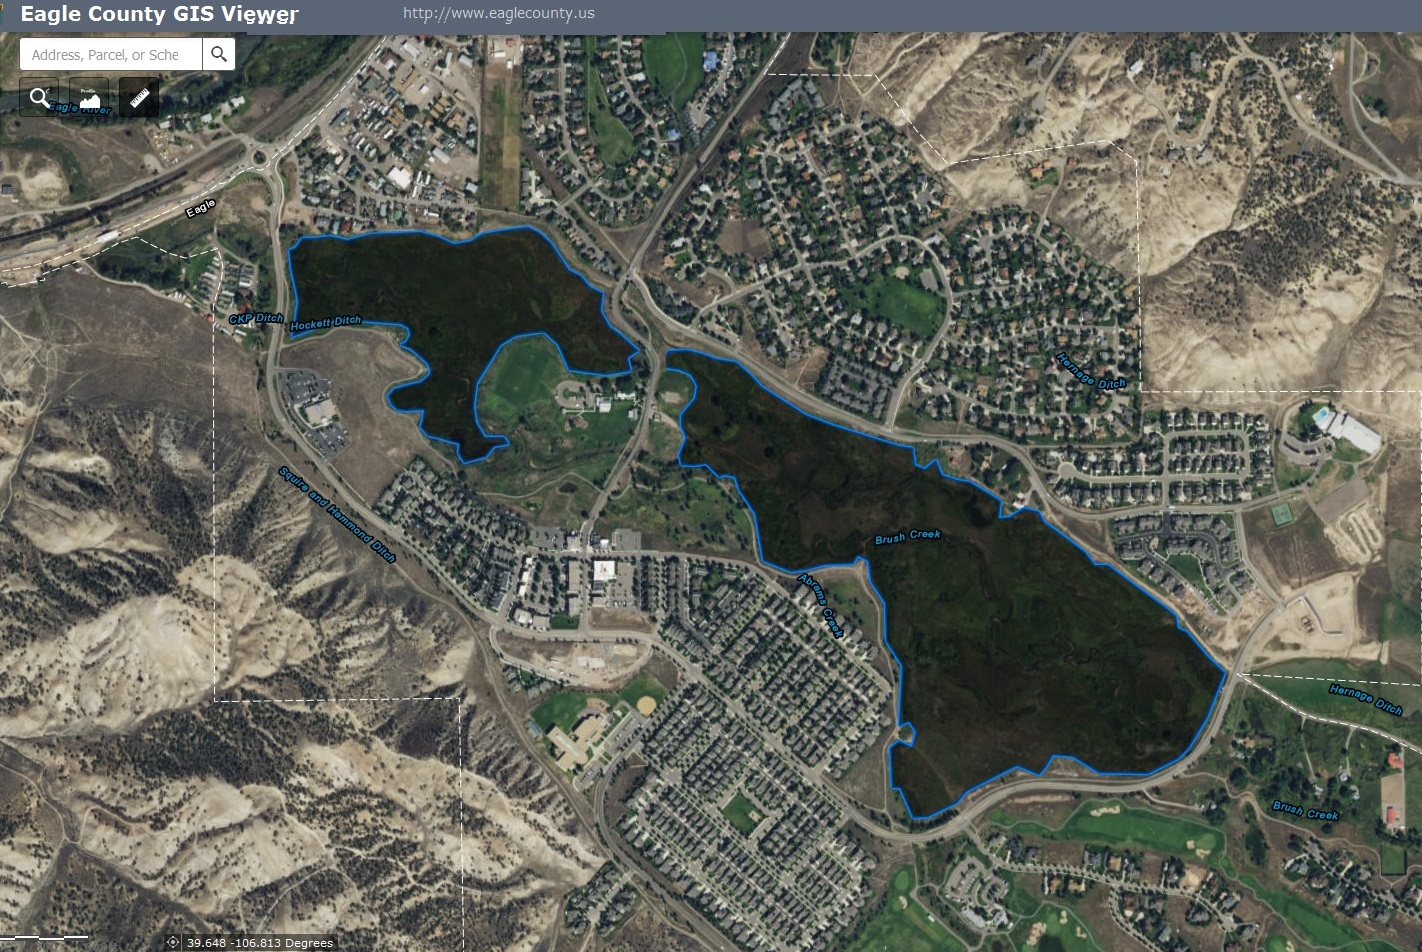 11-3-16-brush-creek-recreation-lakes-eagle-county-gis-lakes-1-2-smaller-size